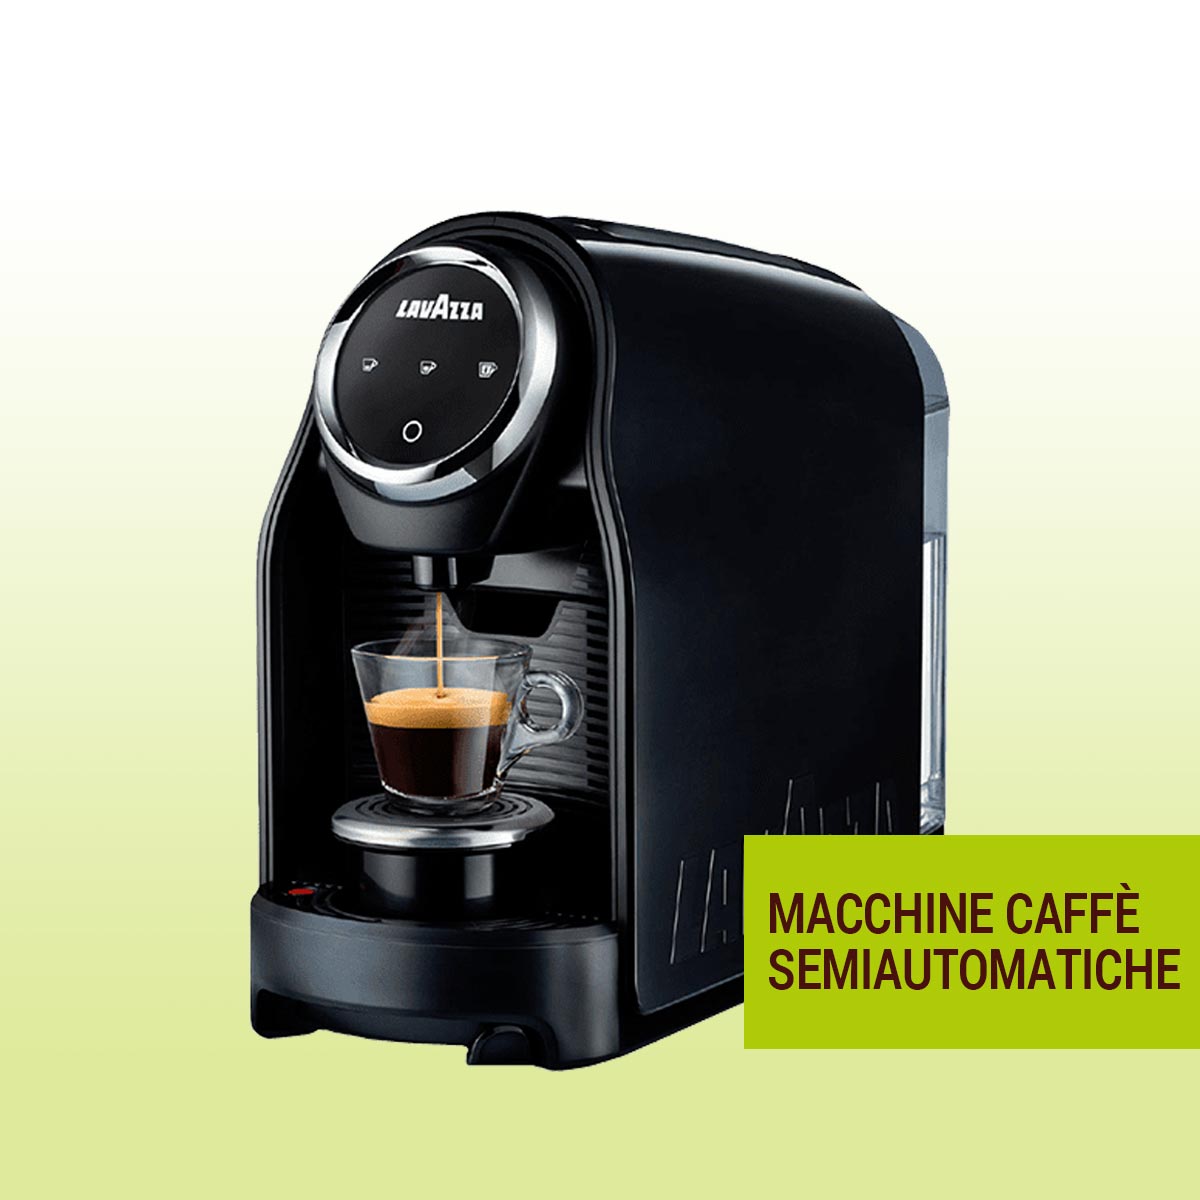 Macchine caffè semiautomatiche per aziende